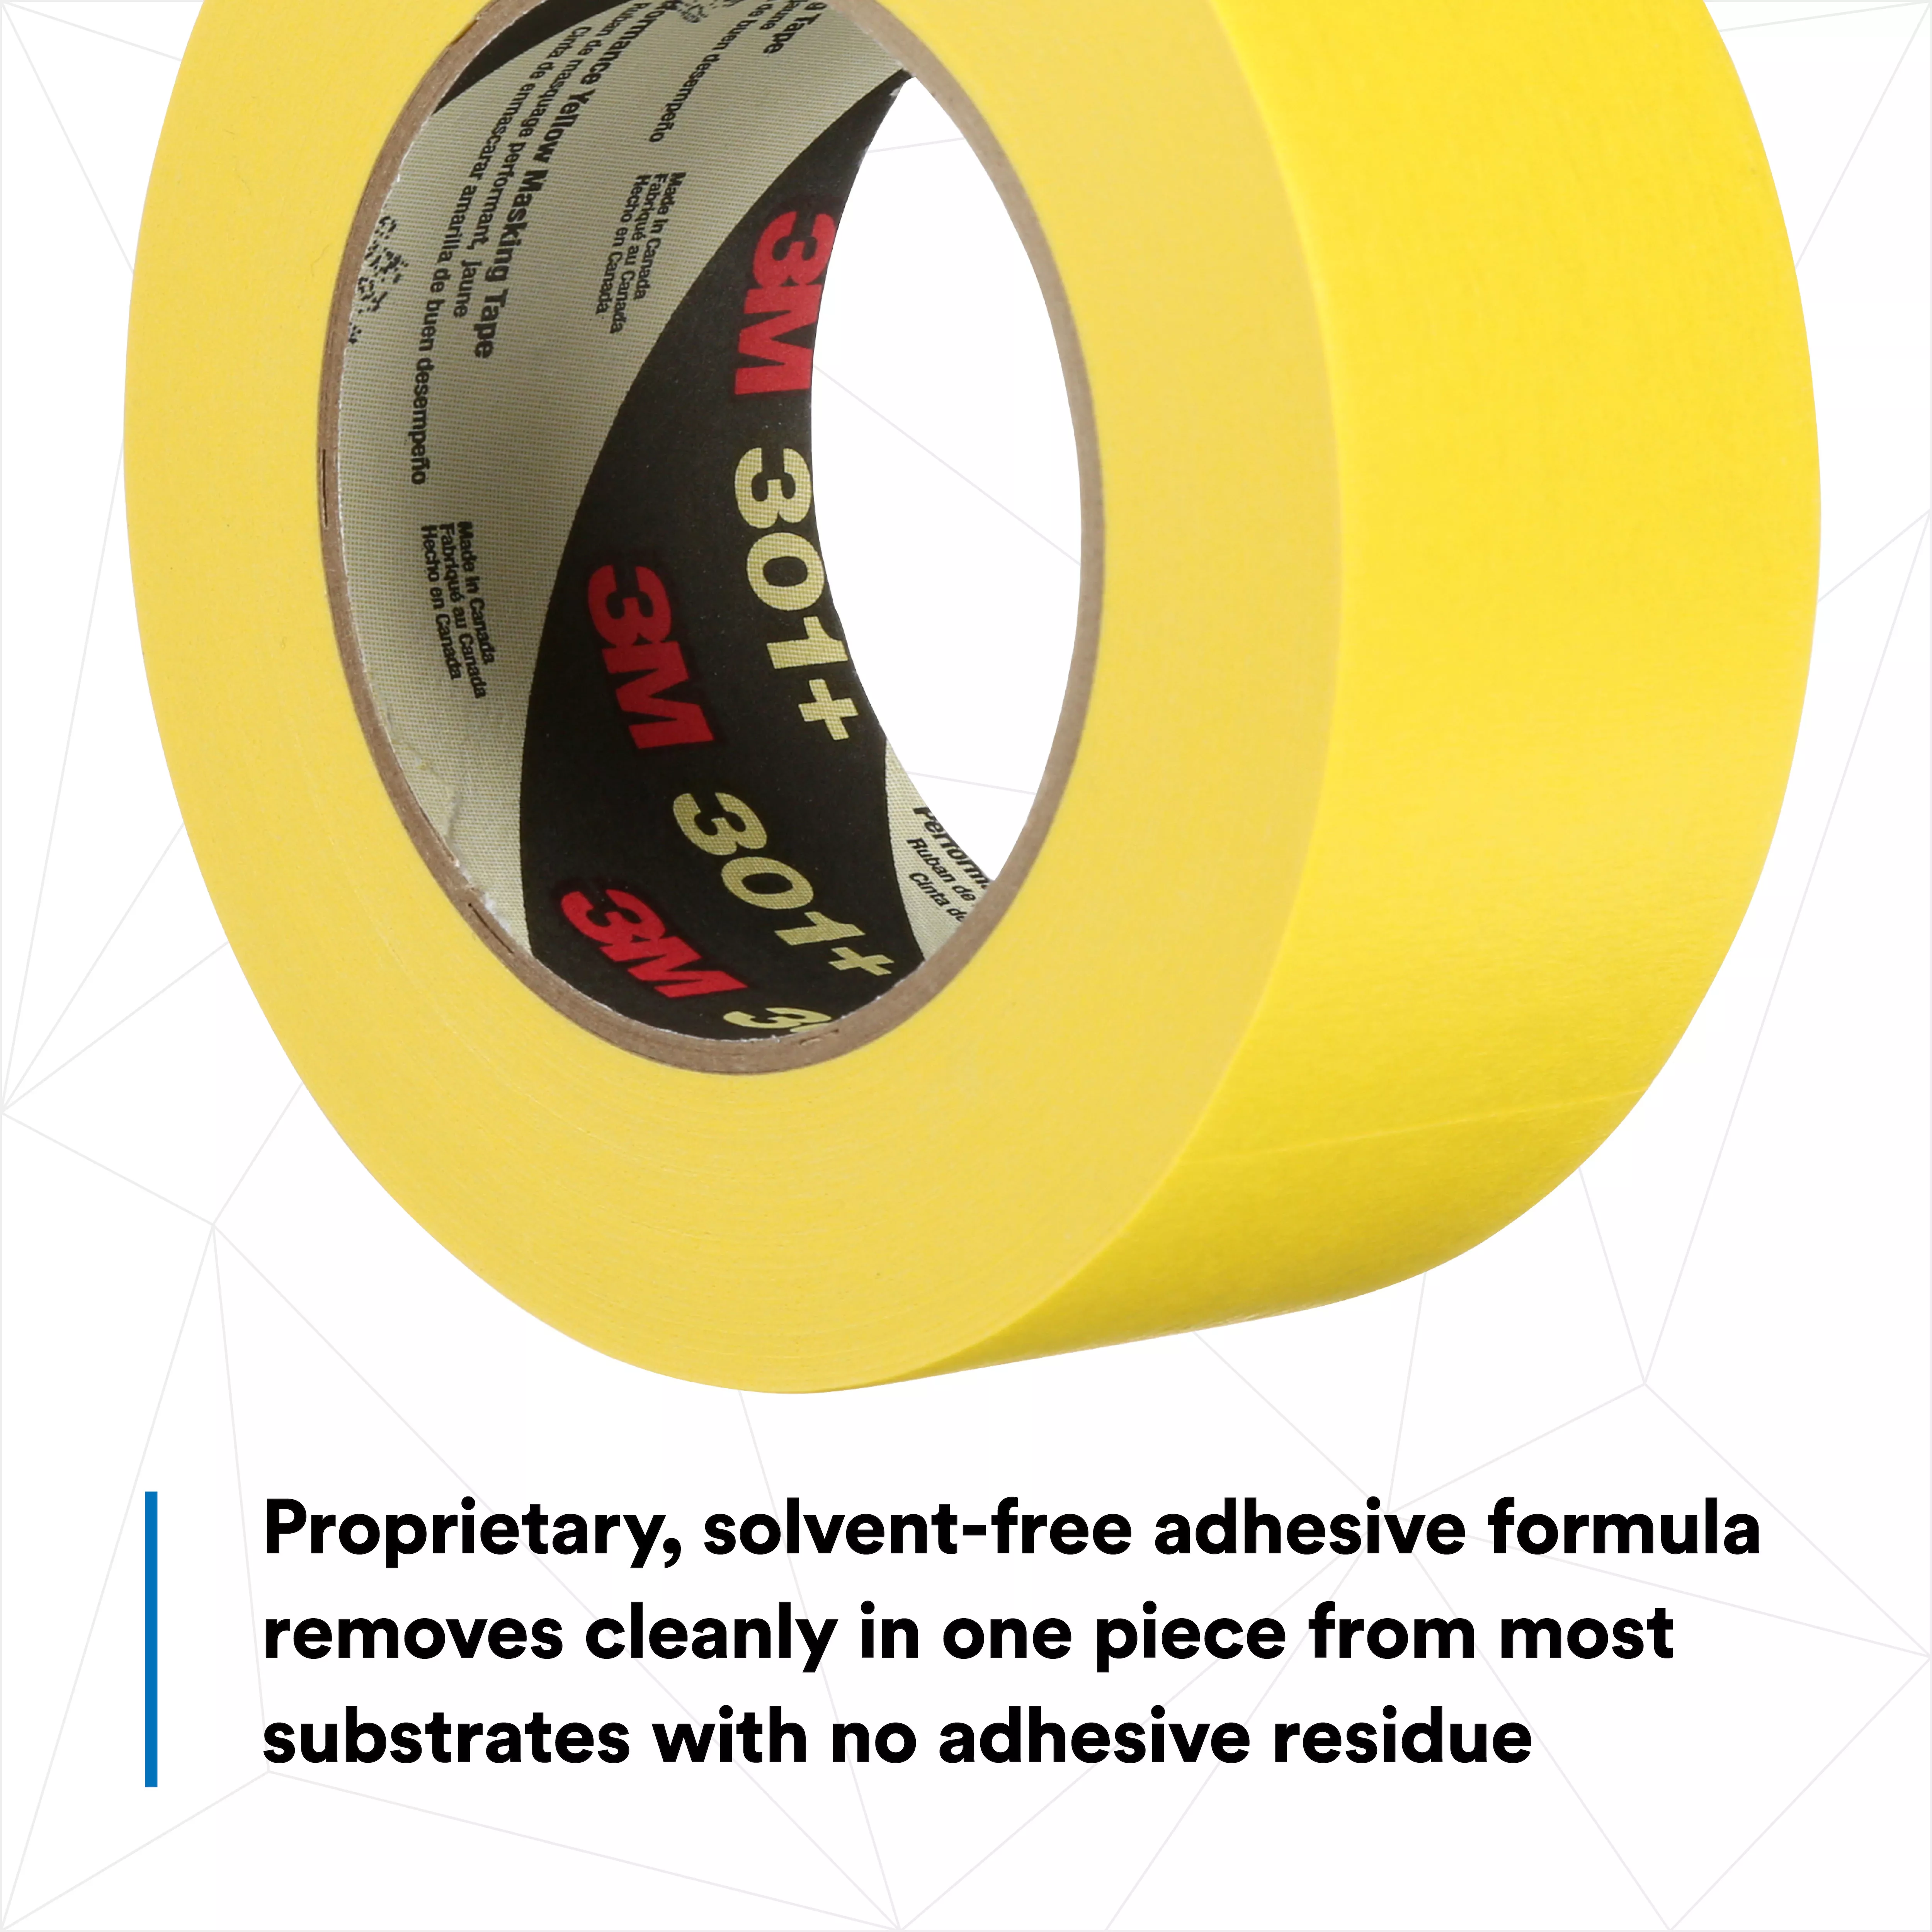 SKU 7000148420 | 3M™ Performance Yellow Masking Tape 301+